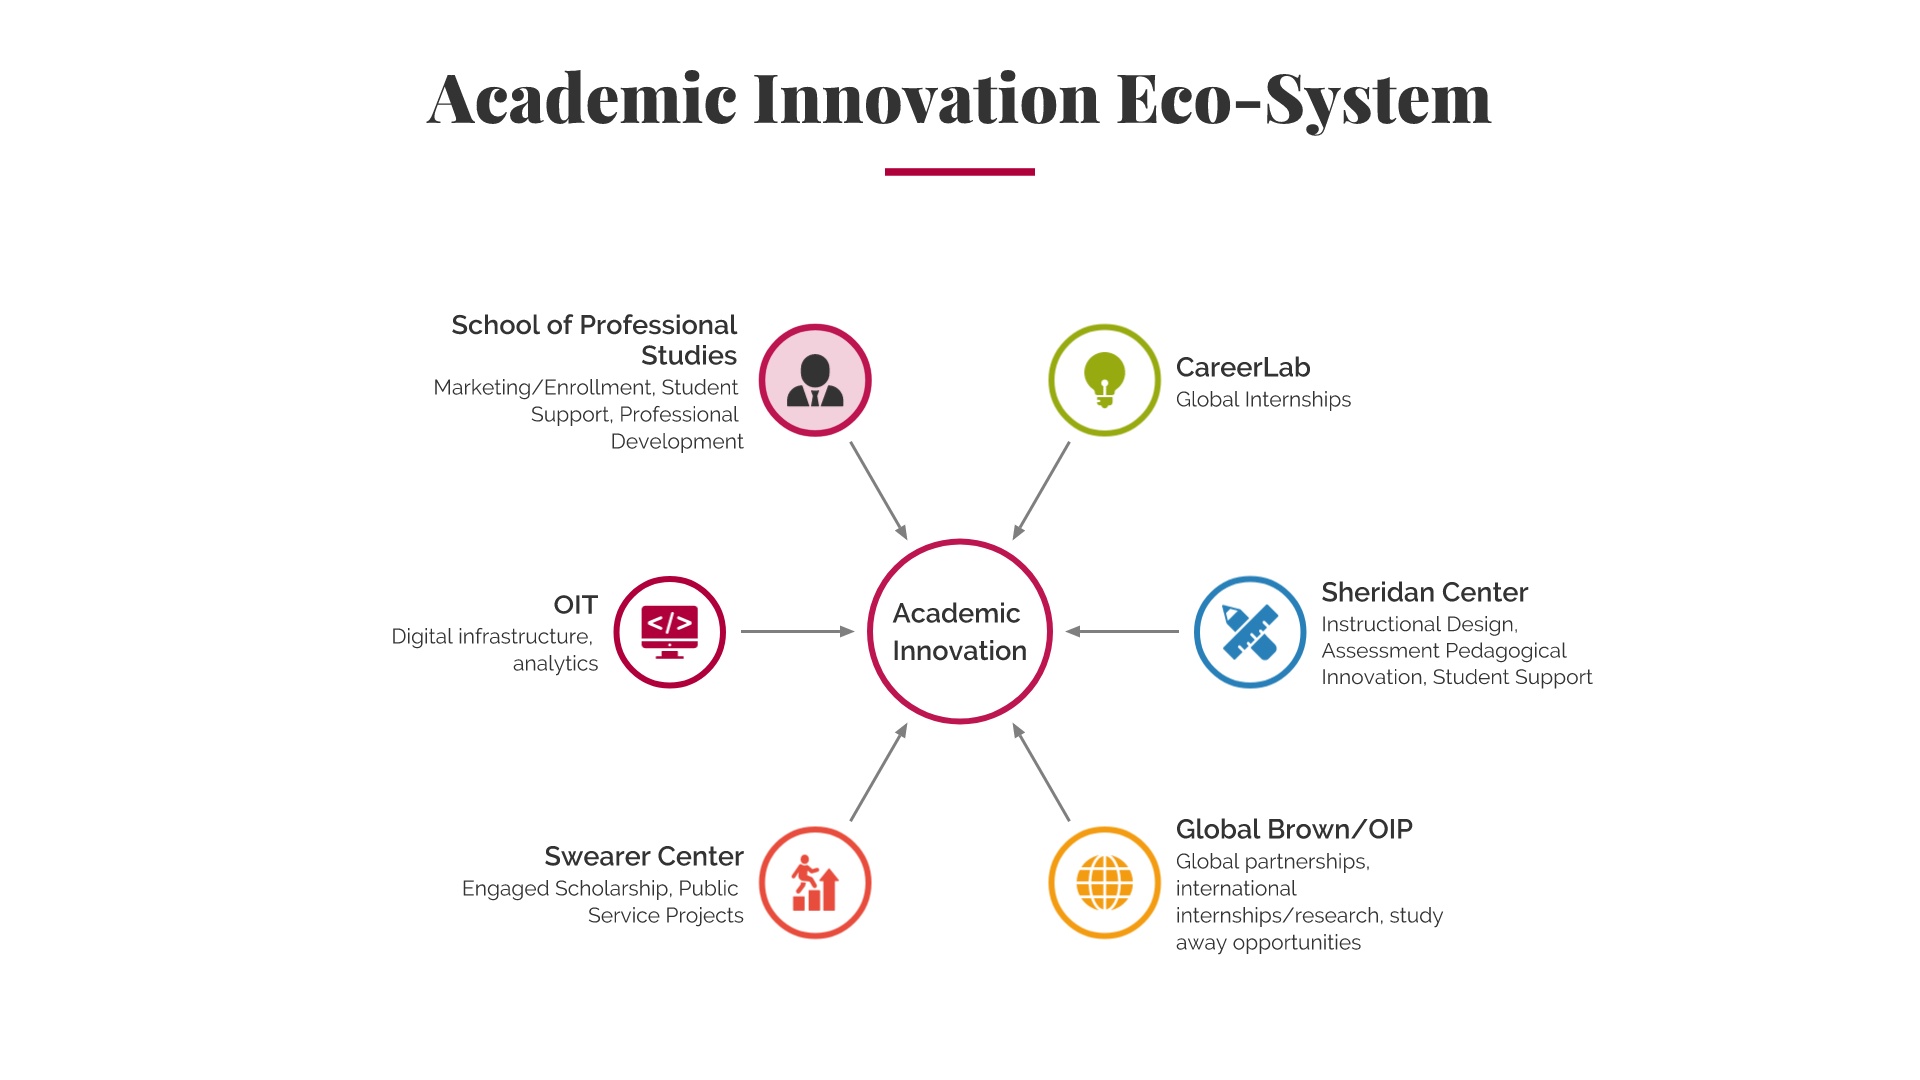 Academic Innovation Eco-System diagram